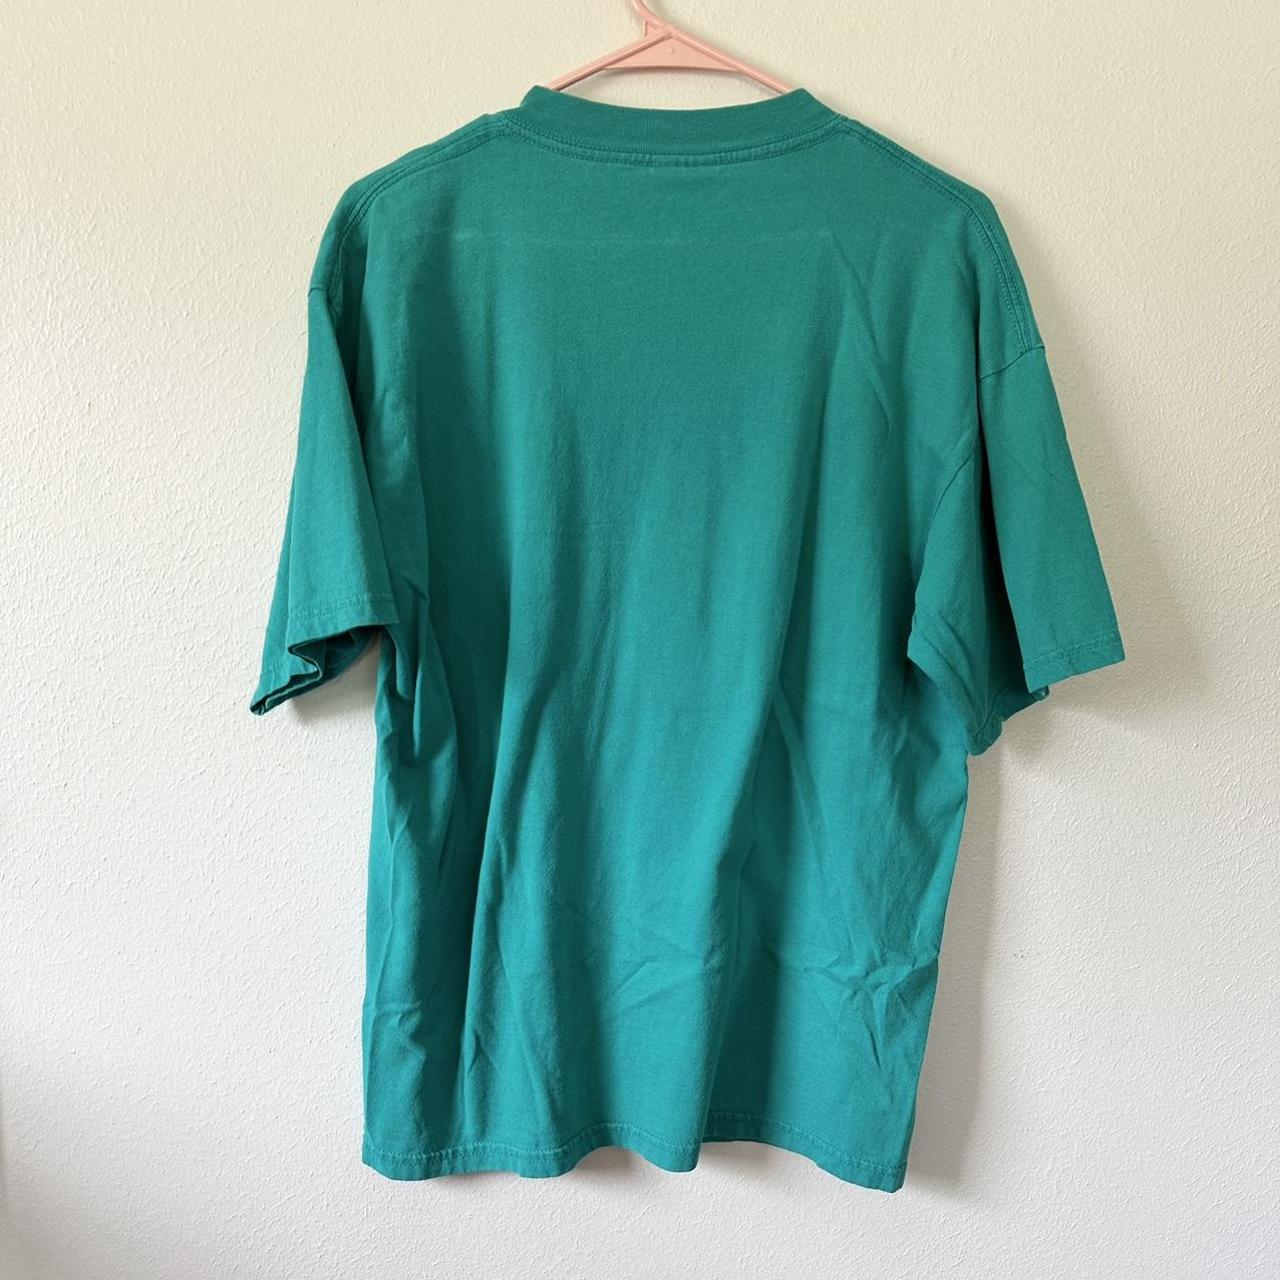 Vintage 90s Teal Blue Jazzercise T-shirt Pullover - Depop